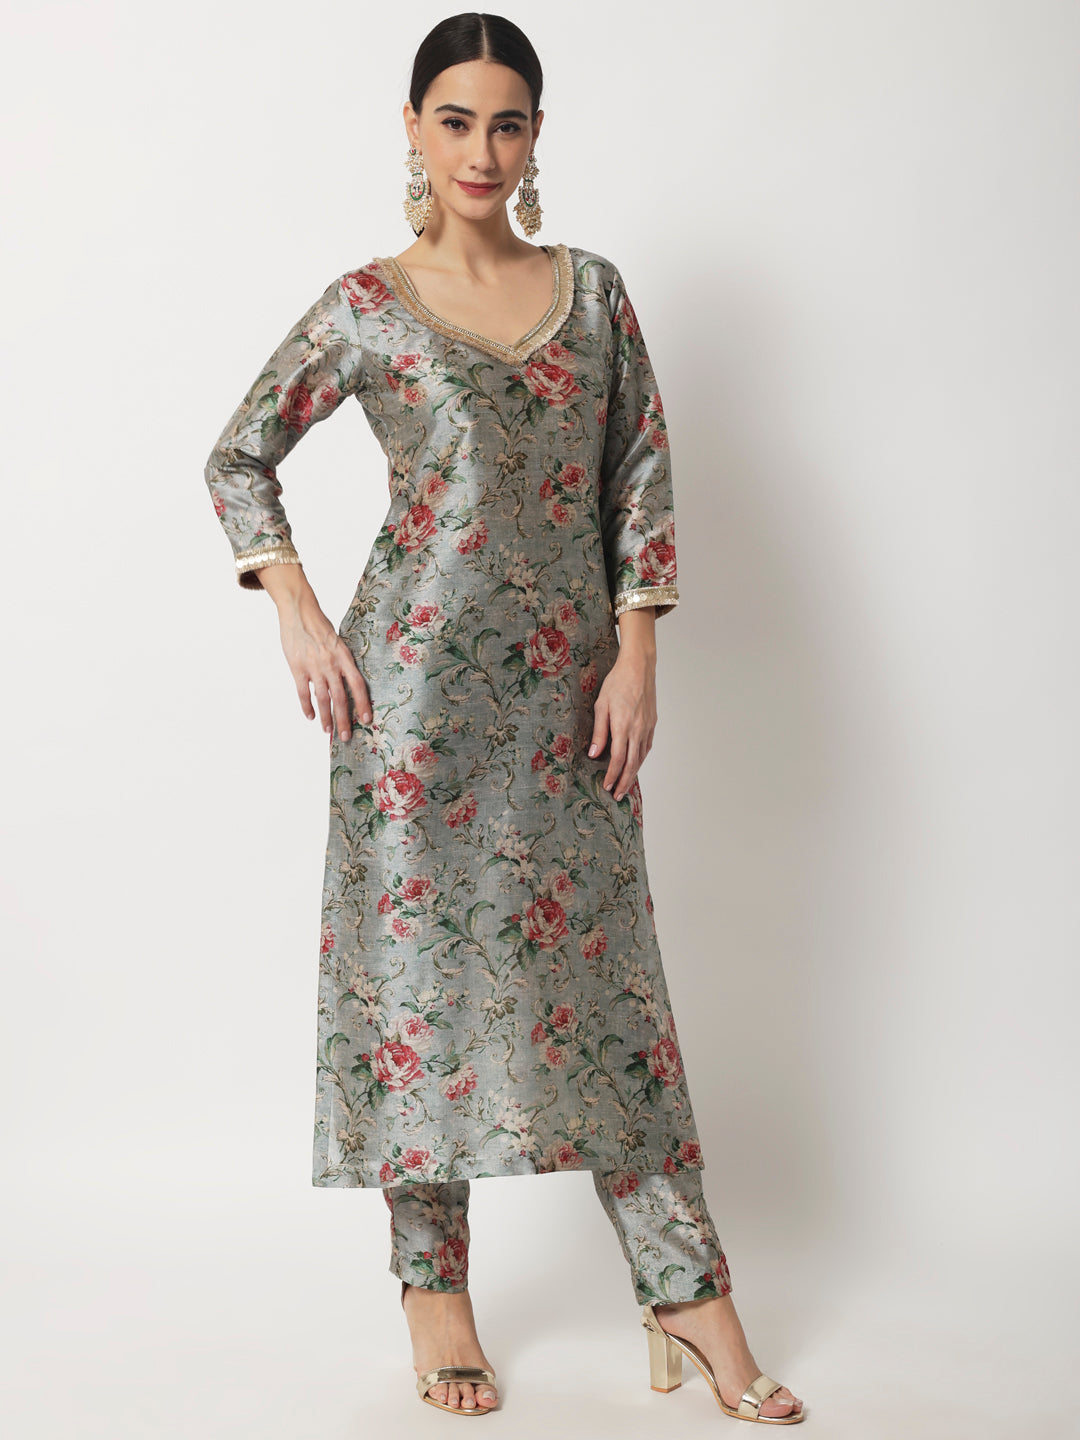 DIFFERENT STYLE PLAIN SUIT IDEAS | Silk kurti designs, Kurta designs women,  Stylish clothes for women